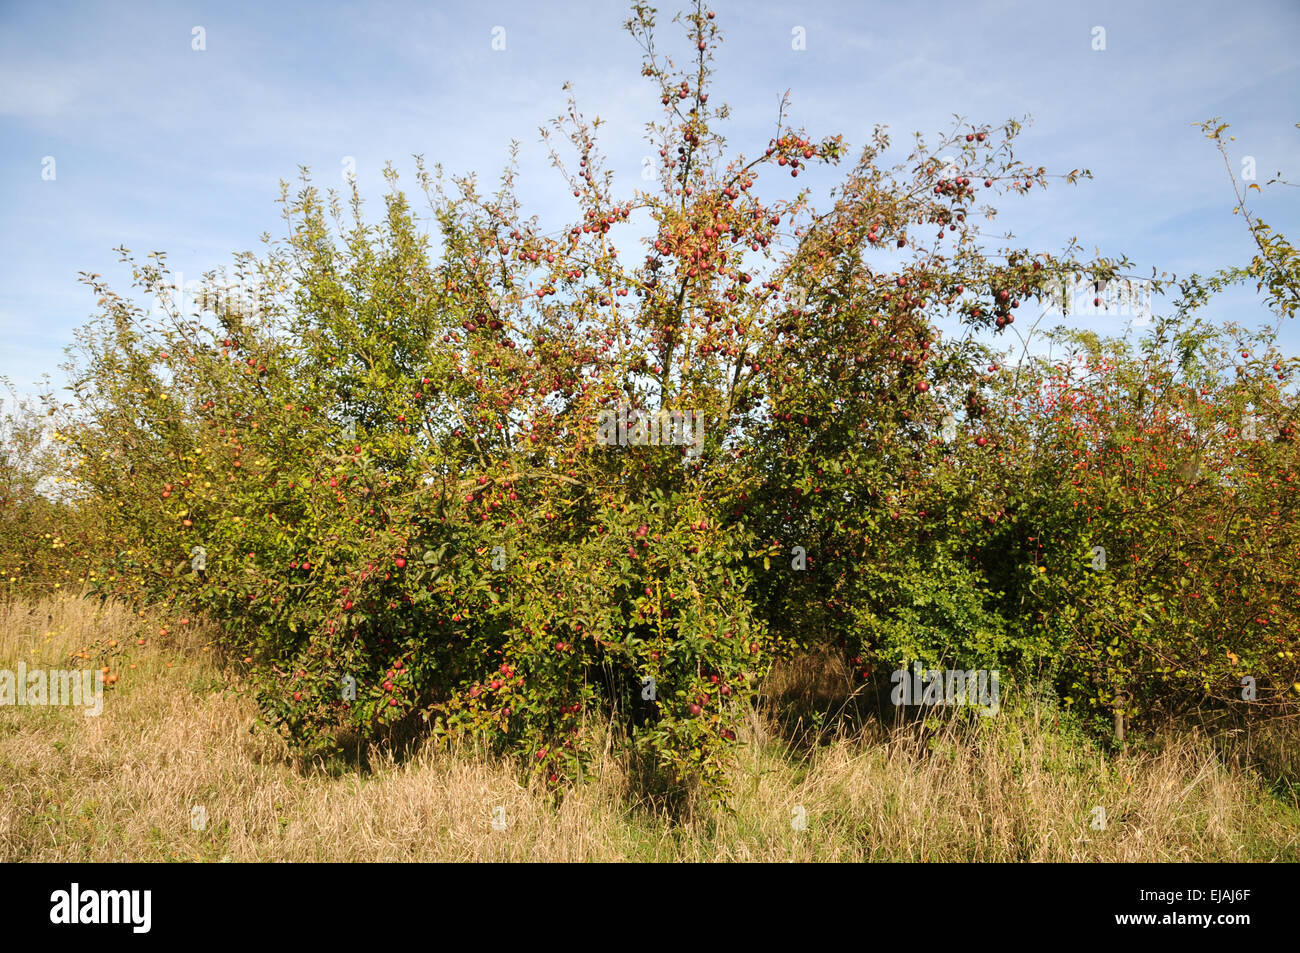 Apple tree Stock Photo